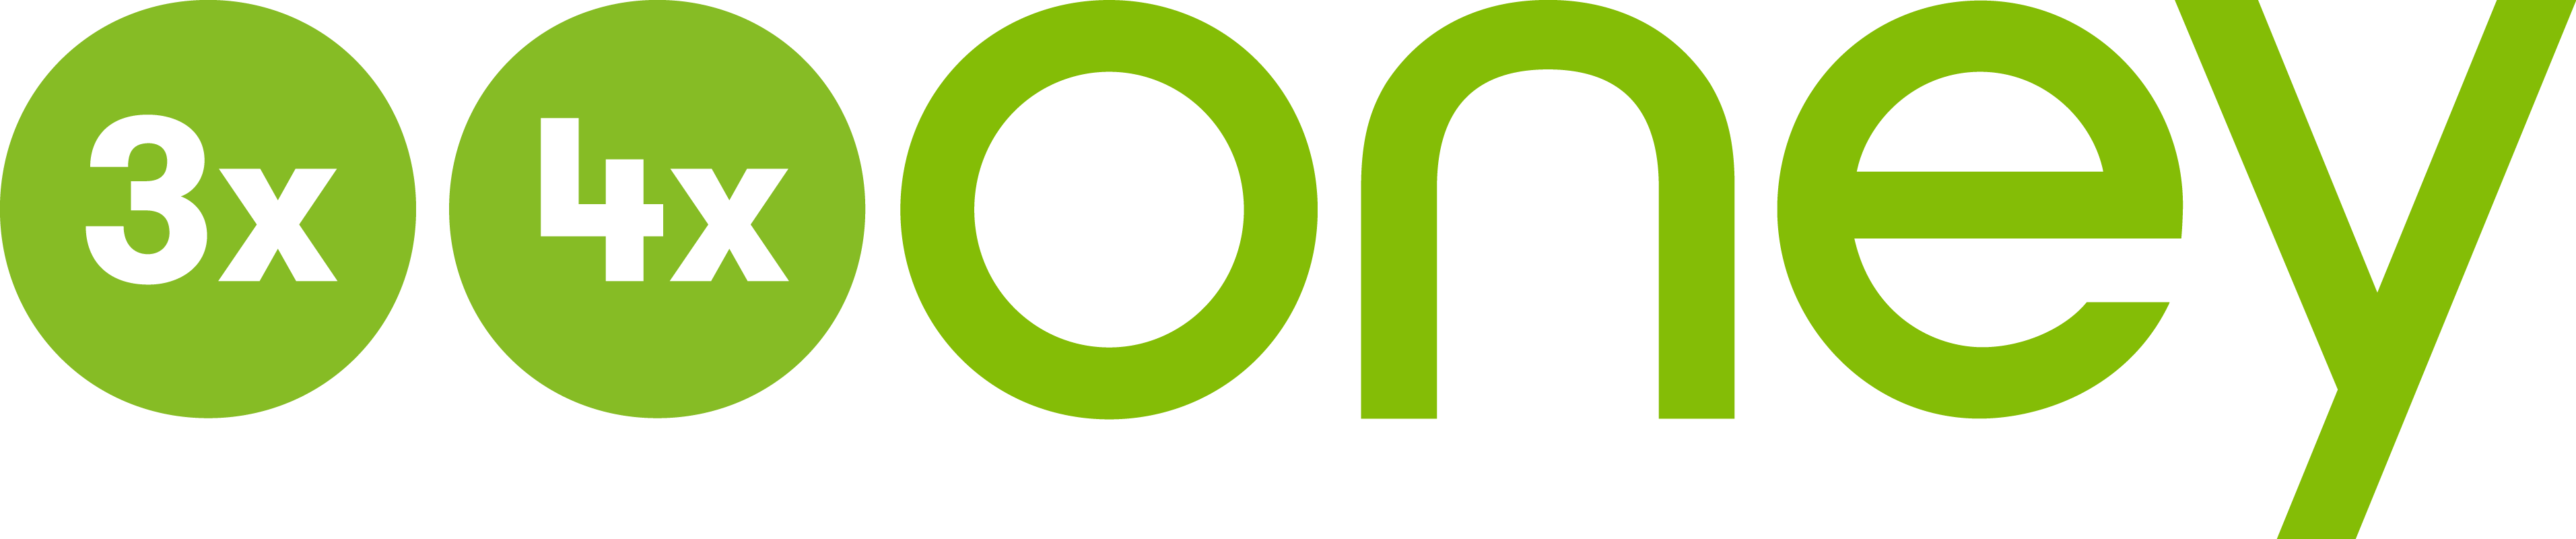 Logo 3X 4X Oney